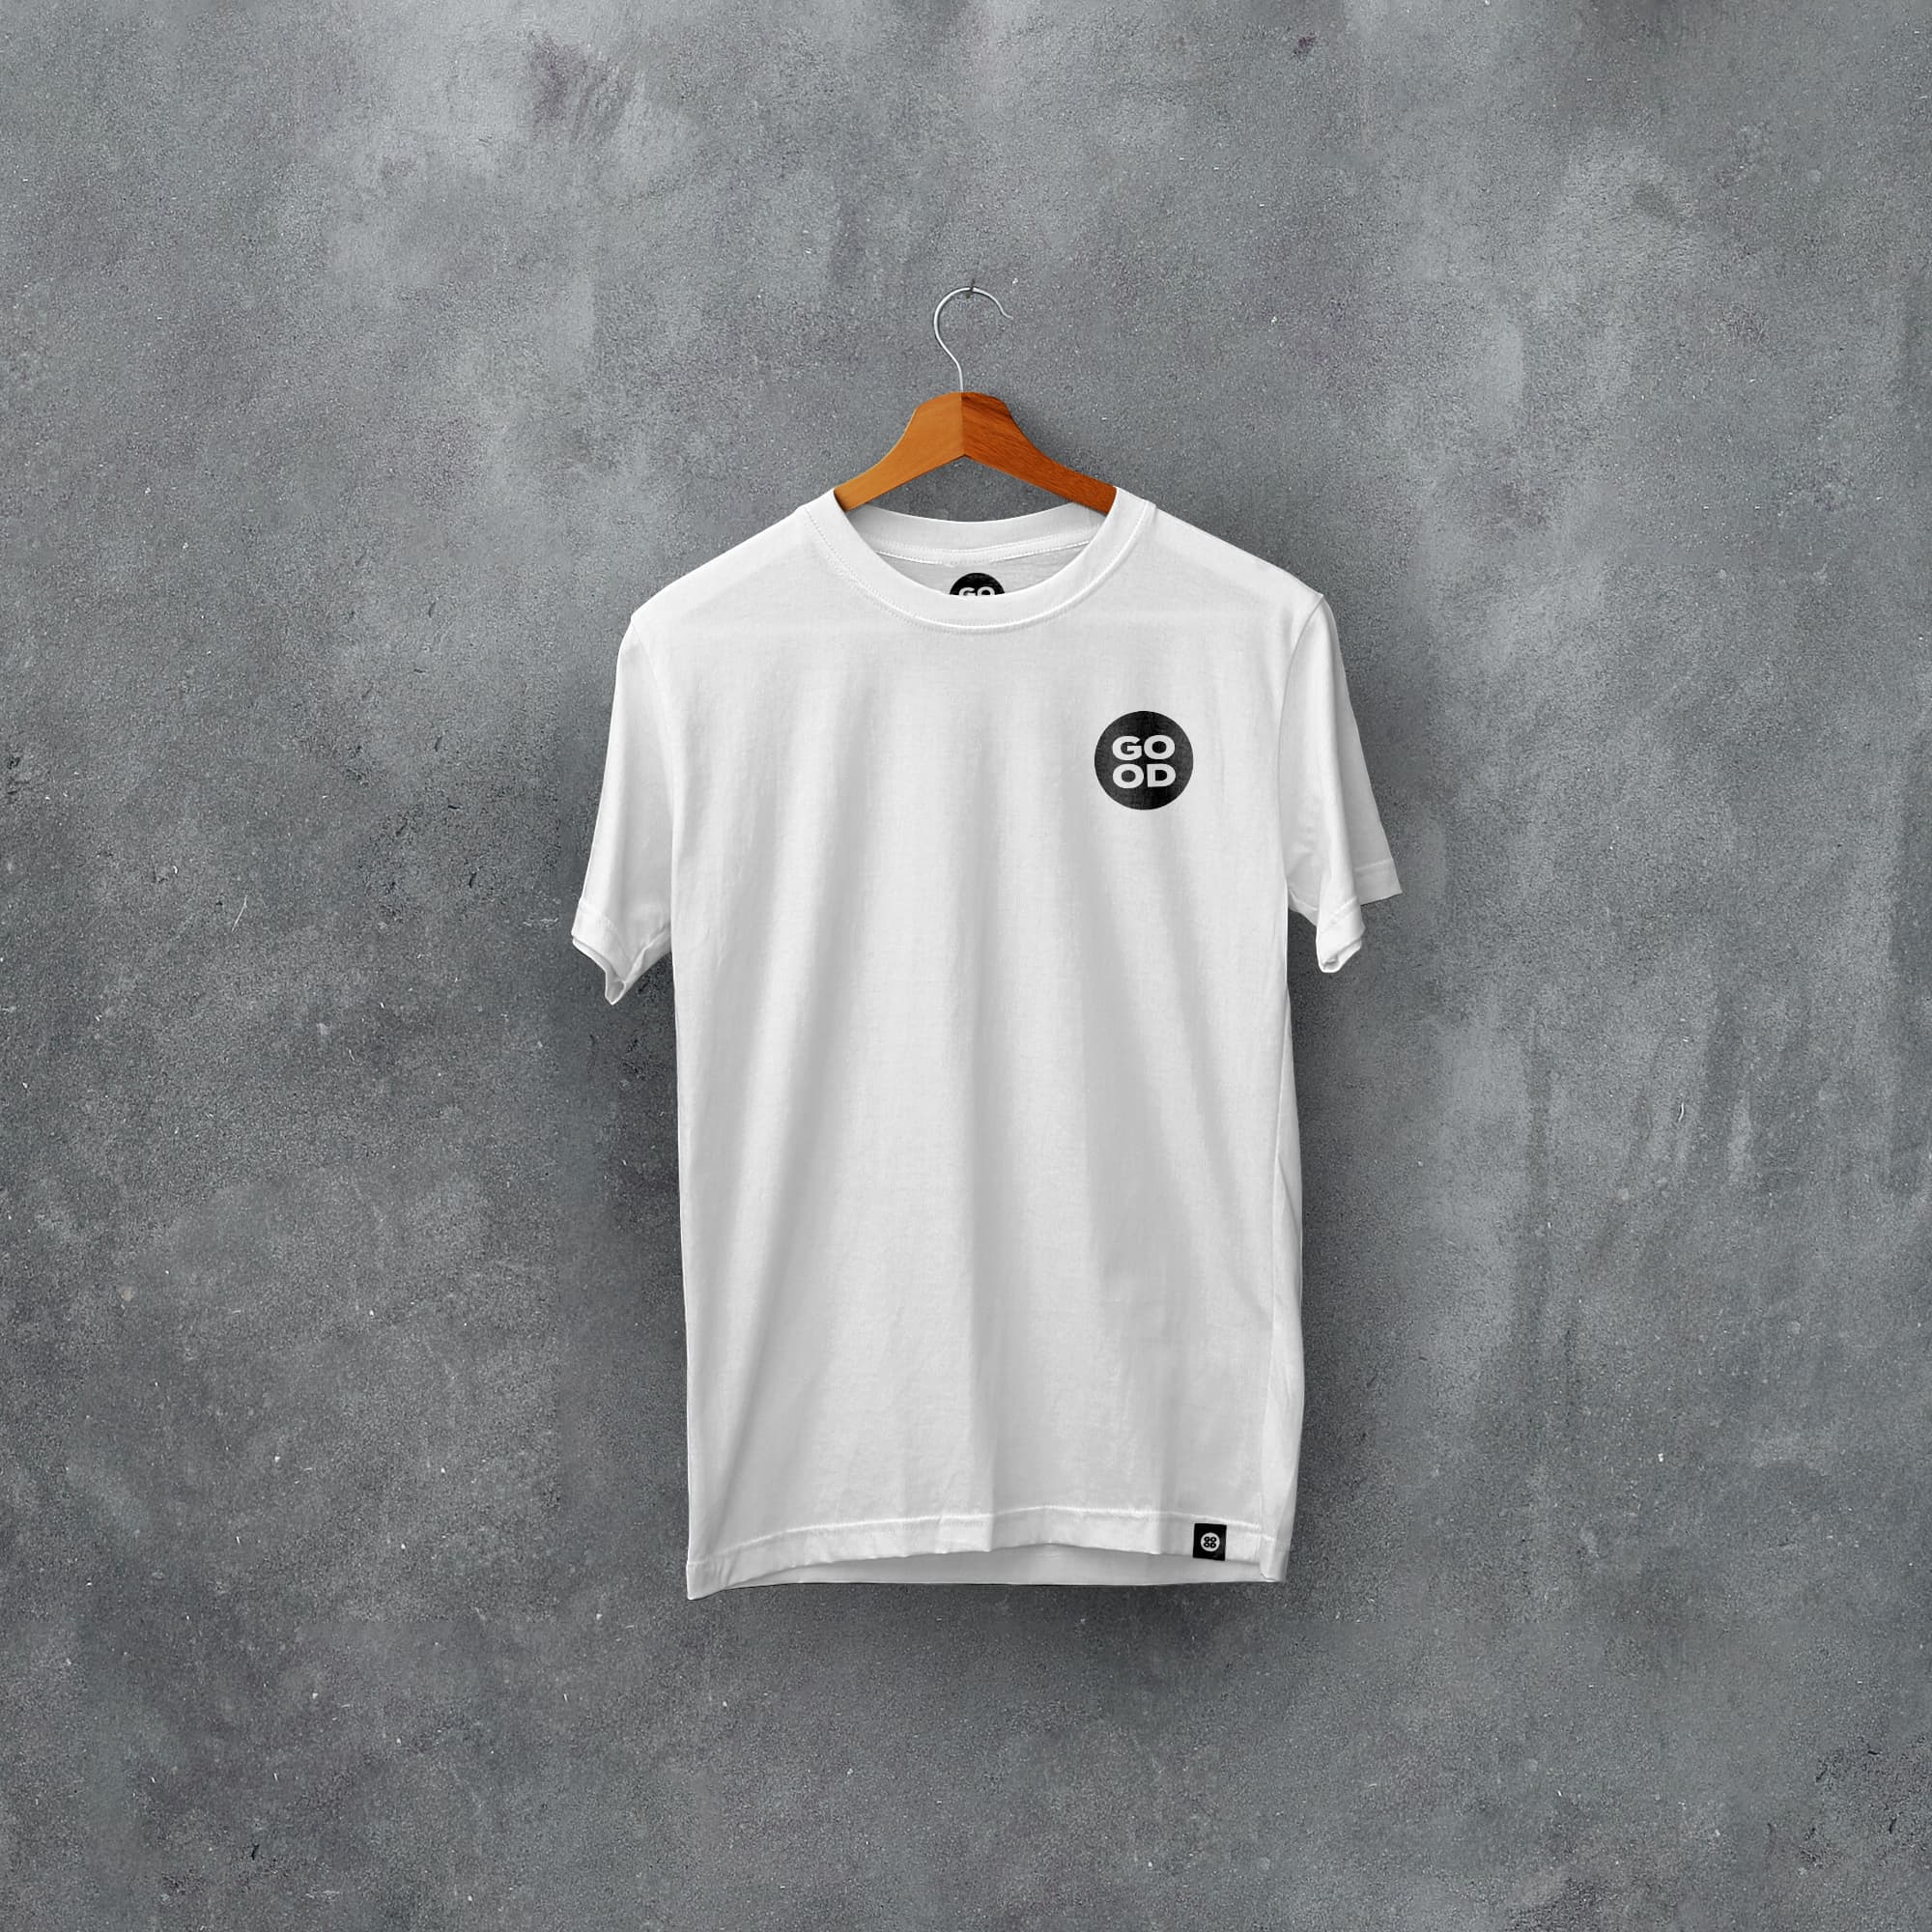 Porto Classic Kits Football T-Shirt